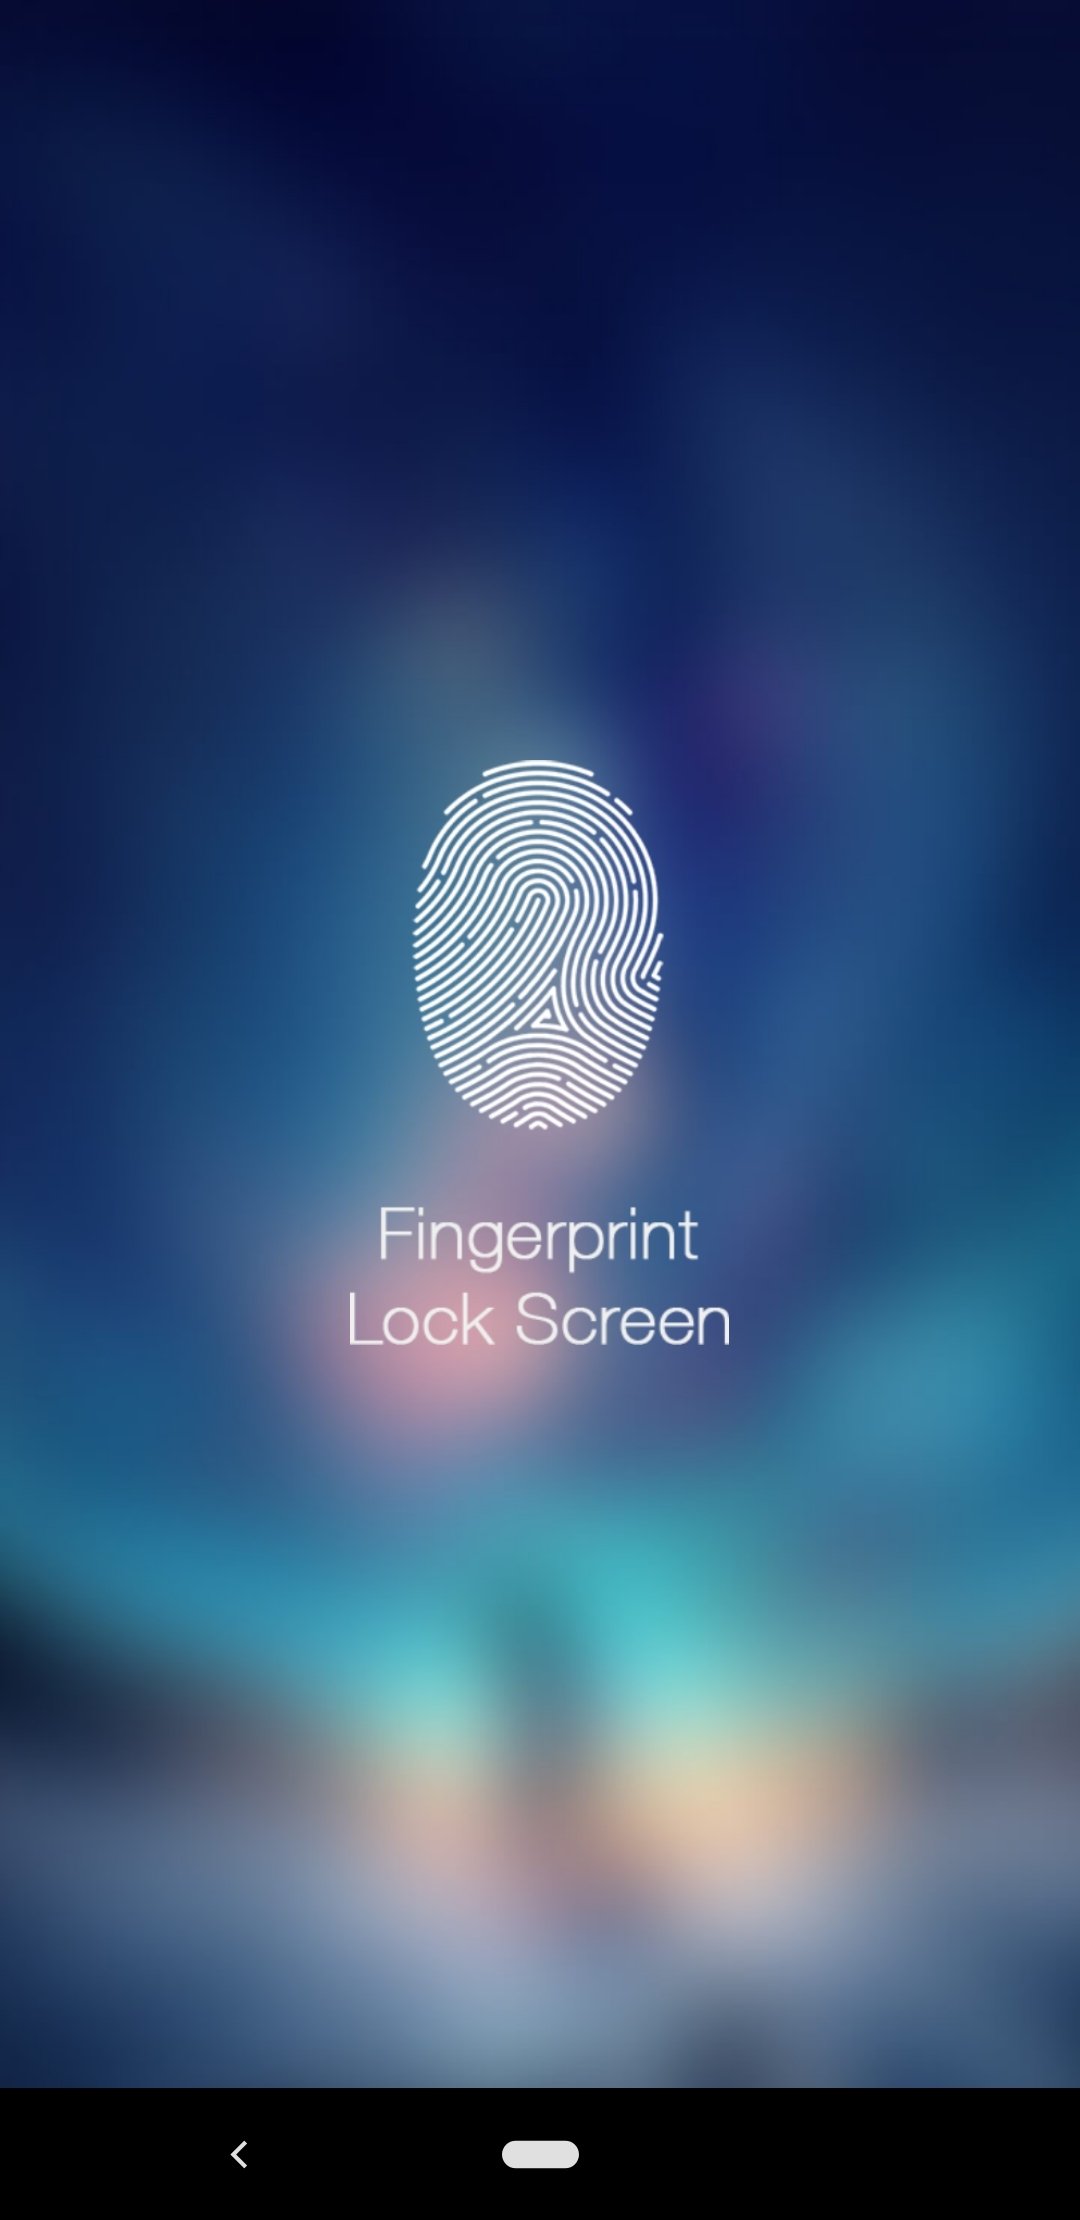 Fingerprint Lock Screen APK download - Fingerprint Lock Screen for Android  Free